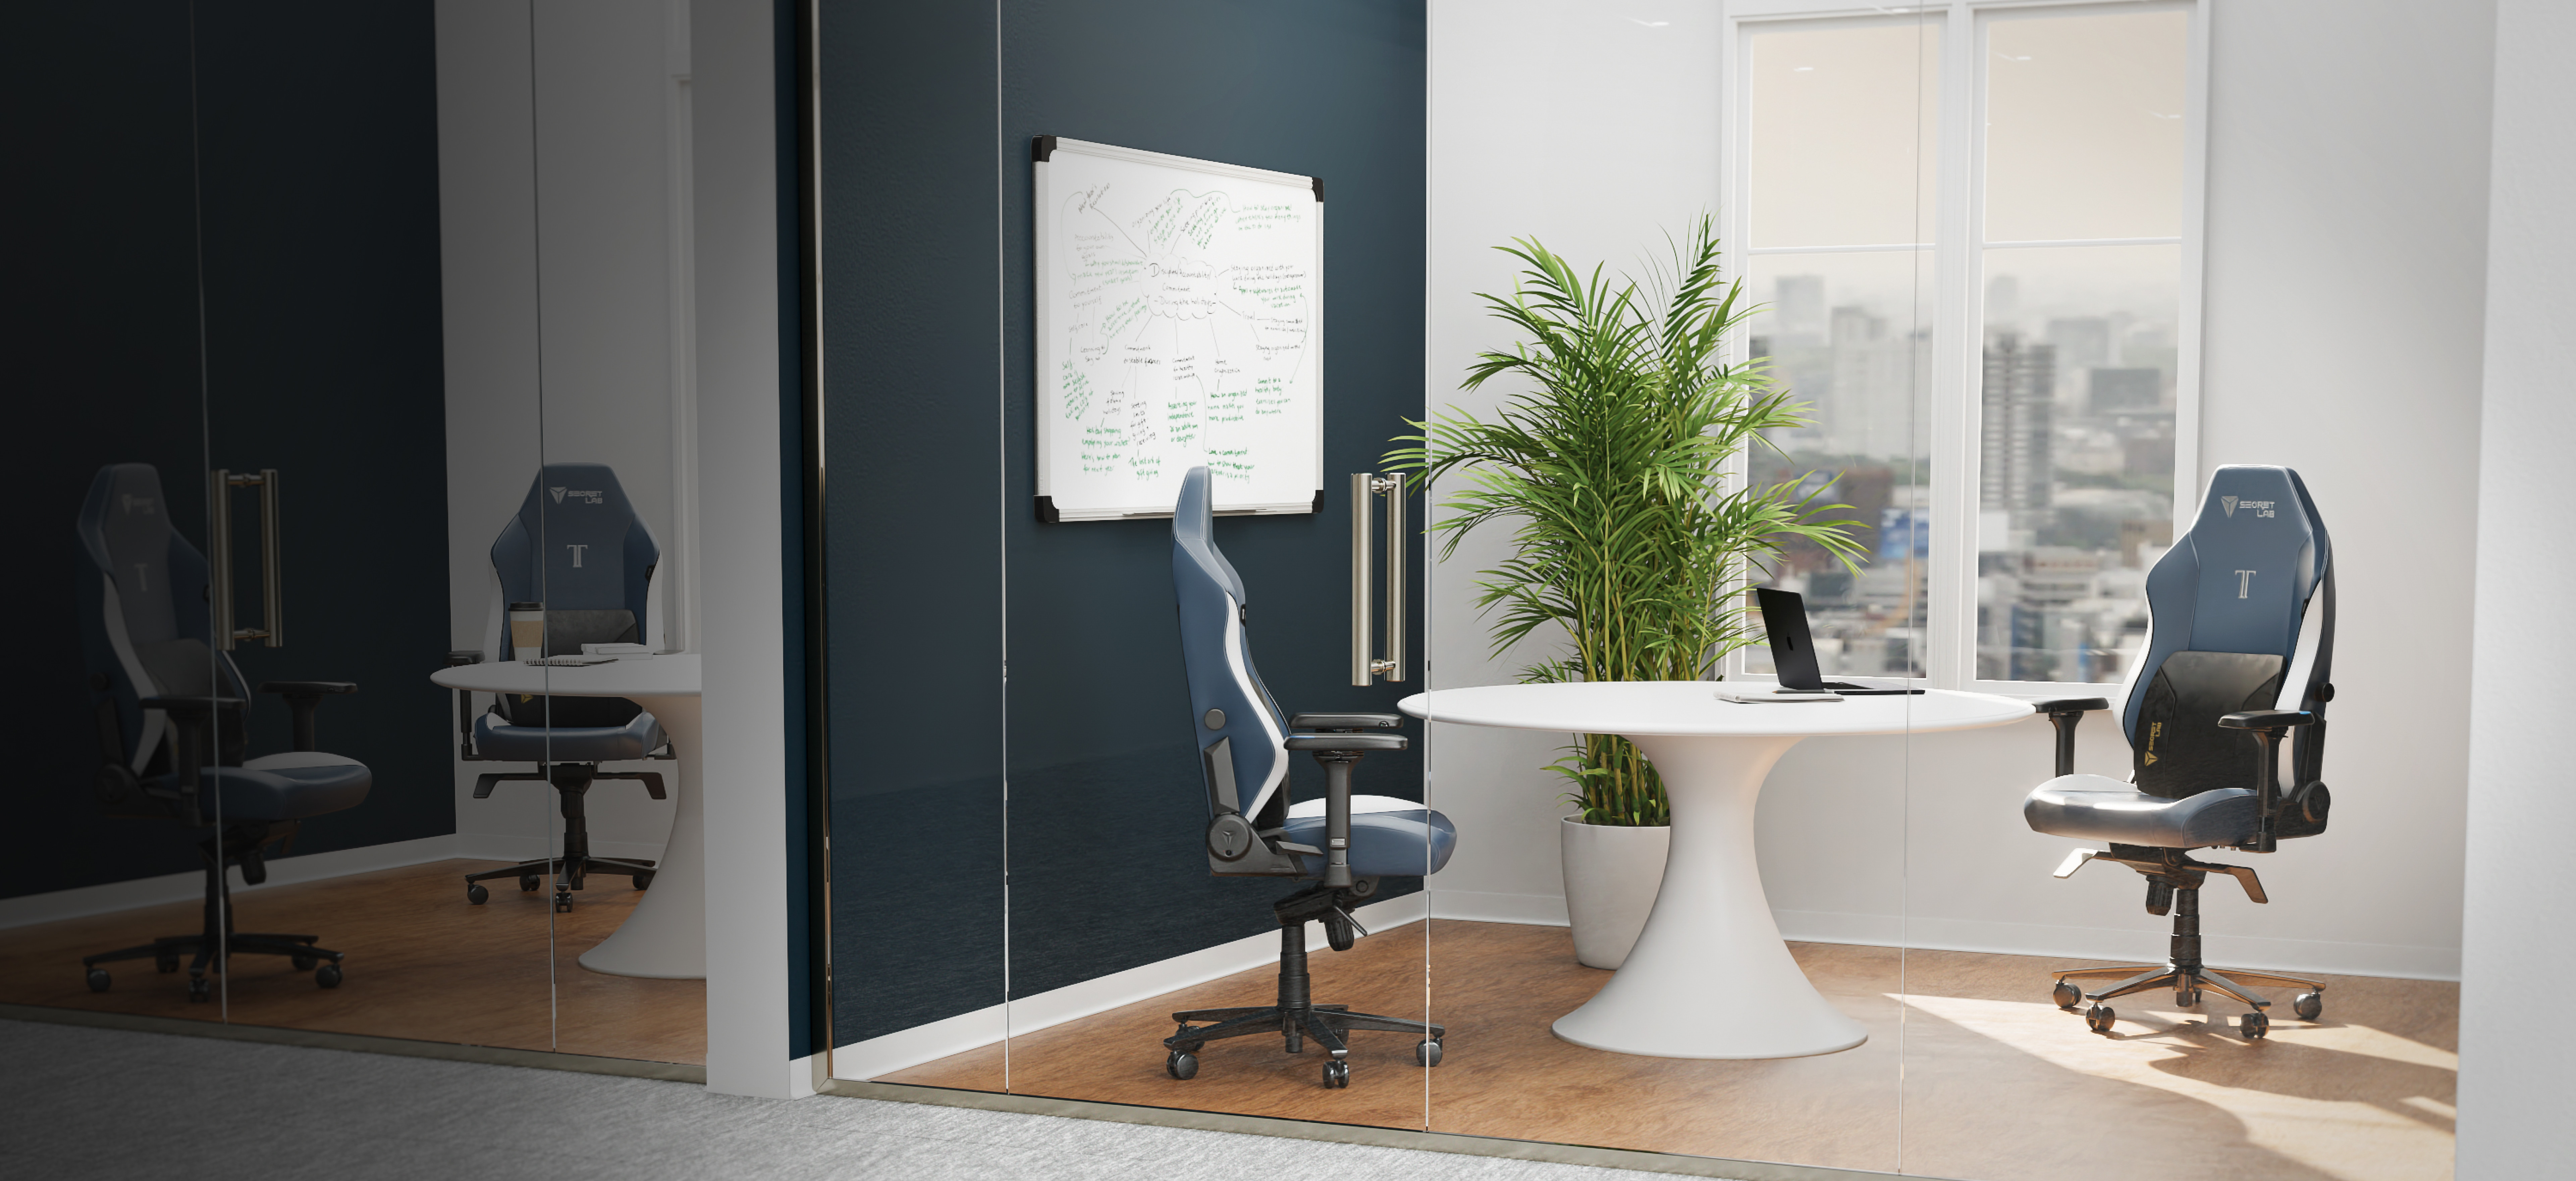 Office focus space environment featuring Secretlab TITAN Evo chairs